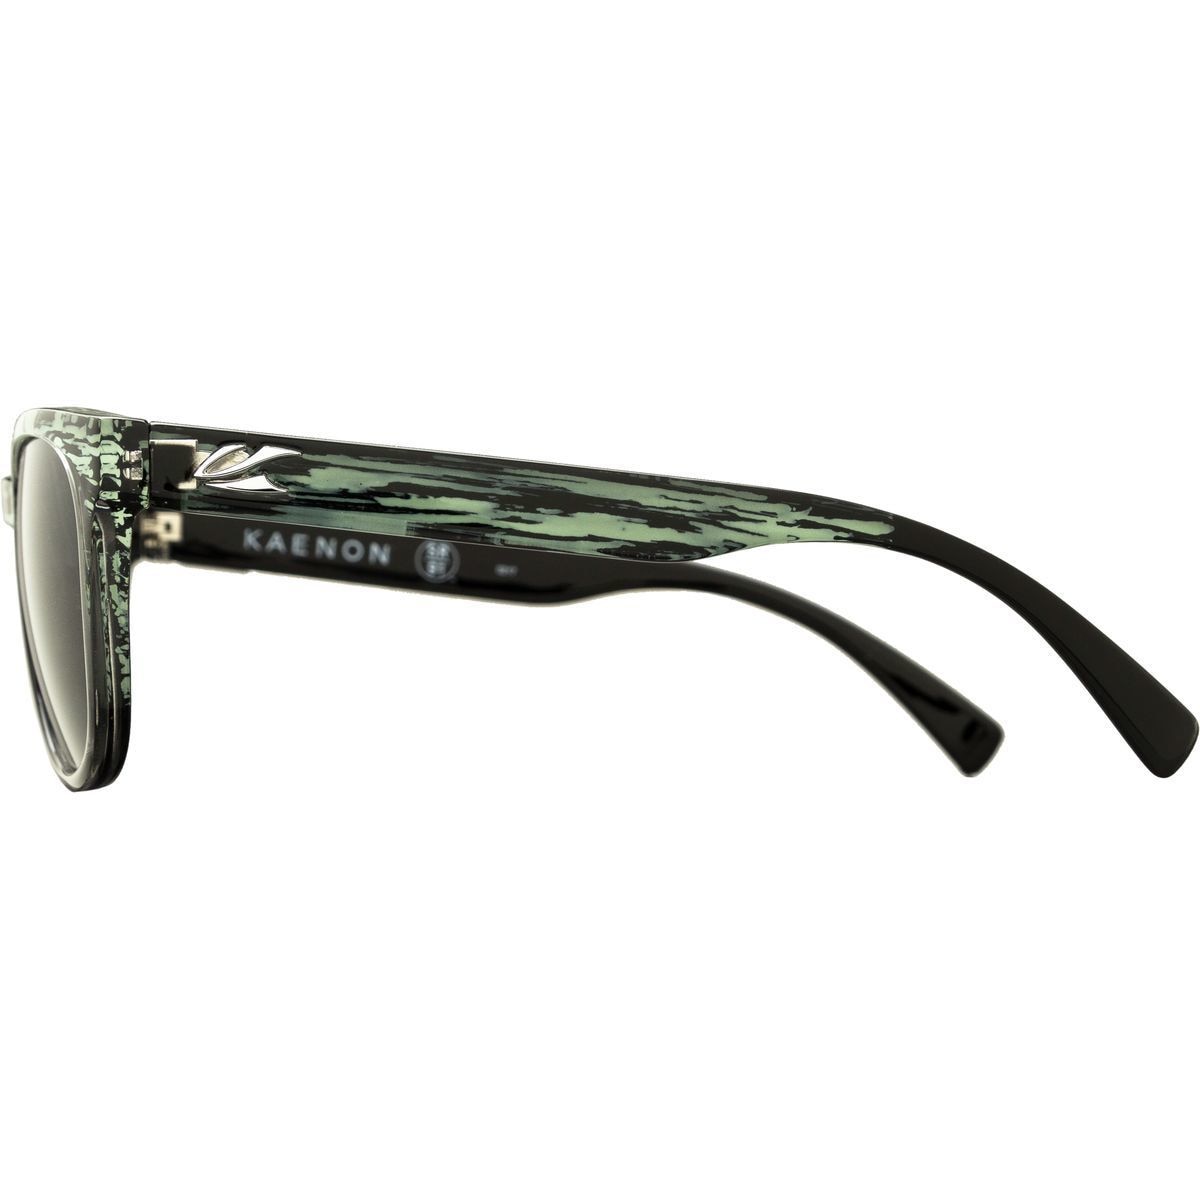 Поляризованные солнцезащитные очки Kaenon Strand Kaenon